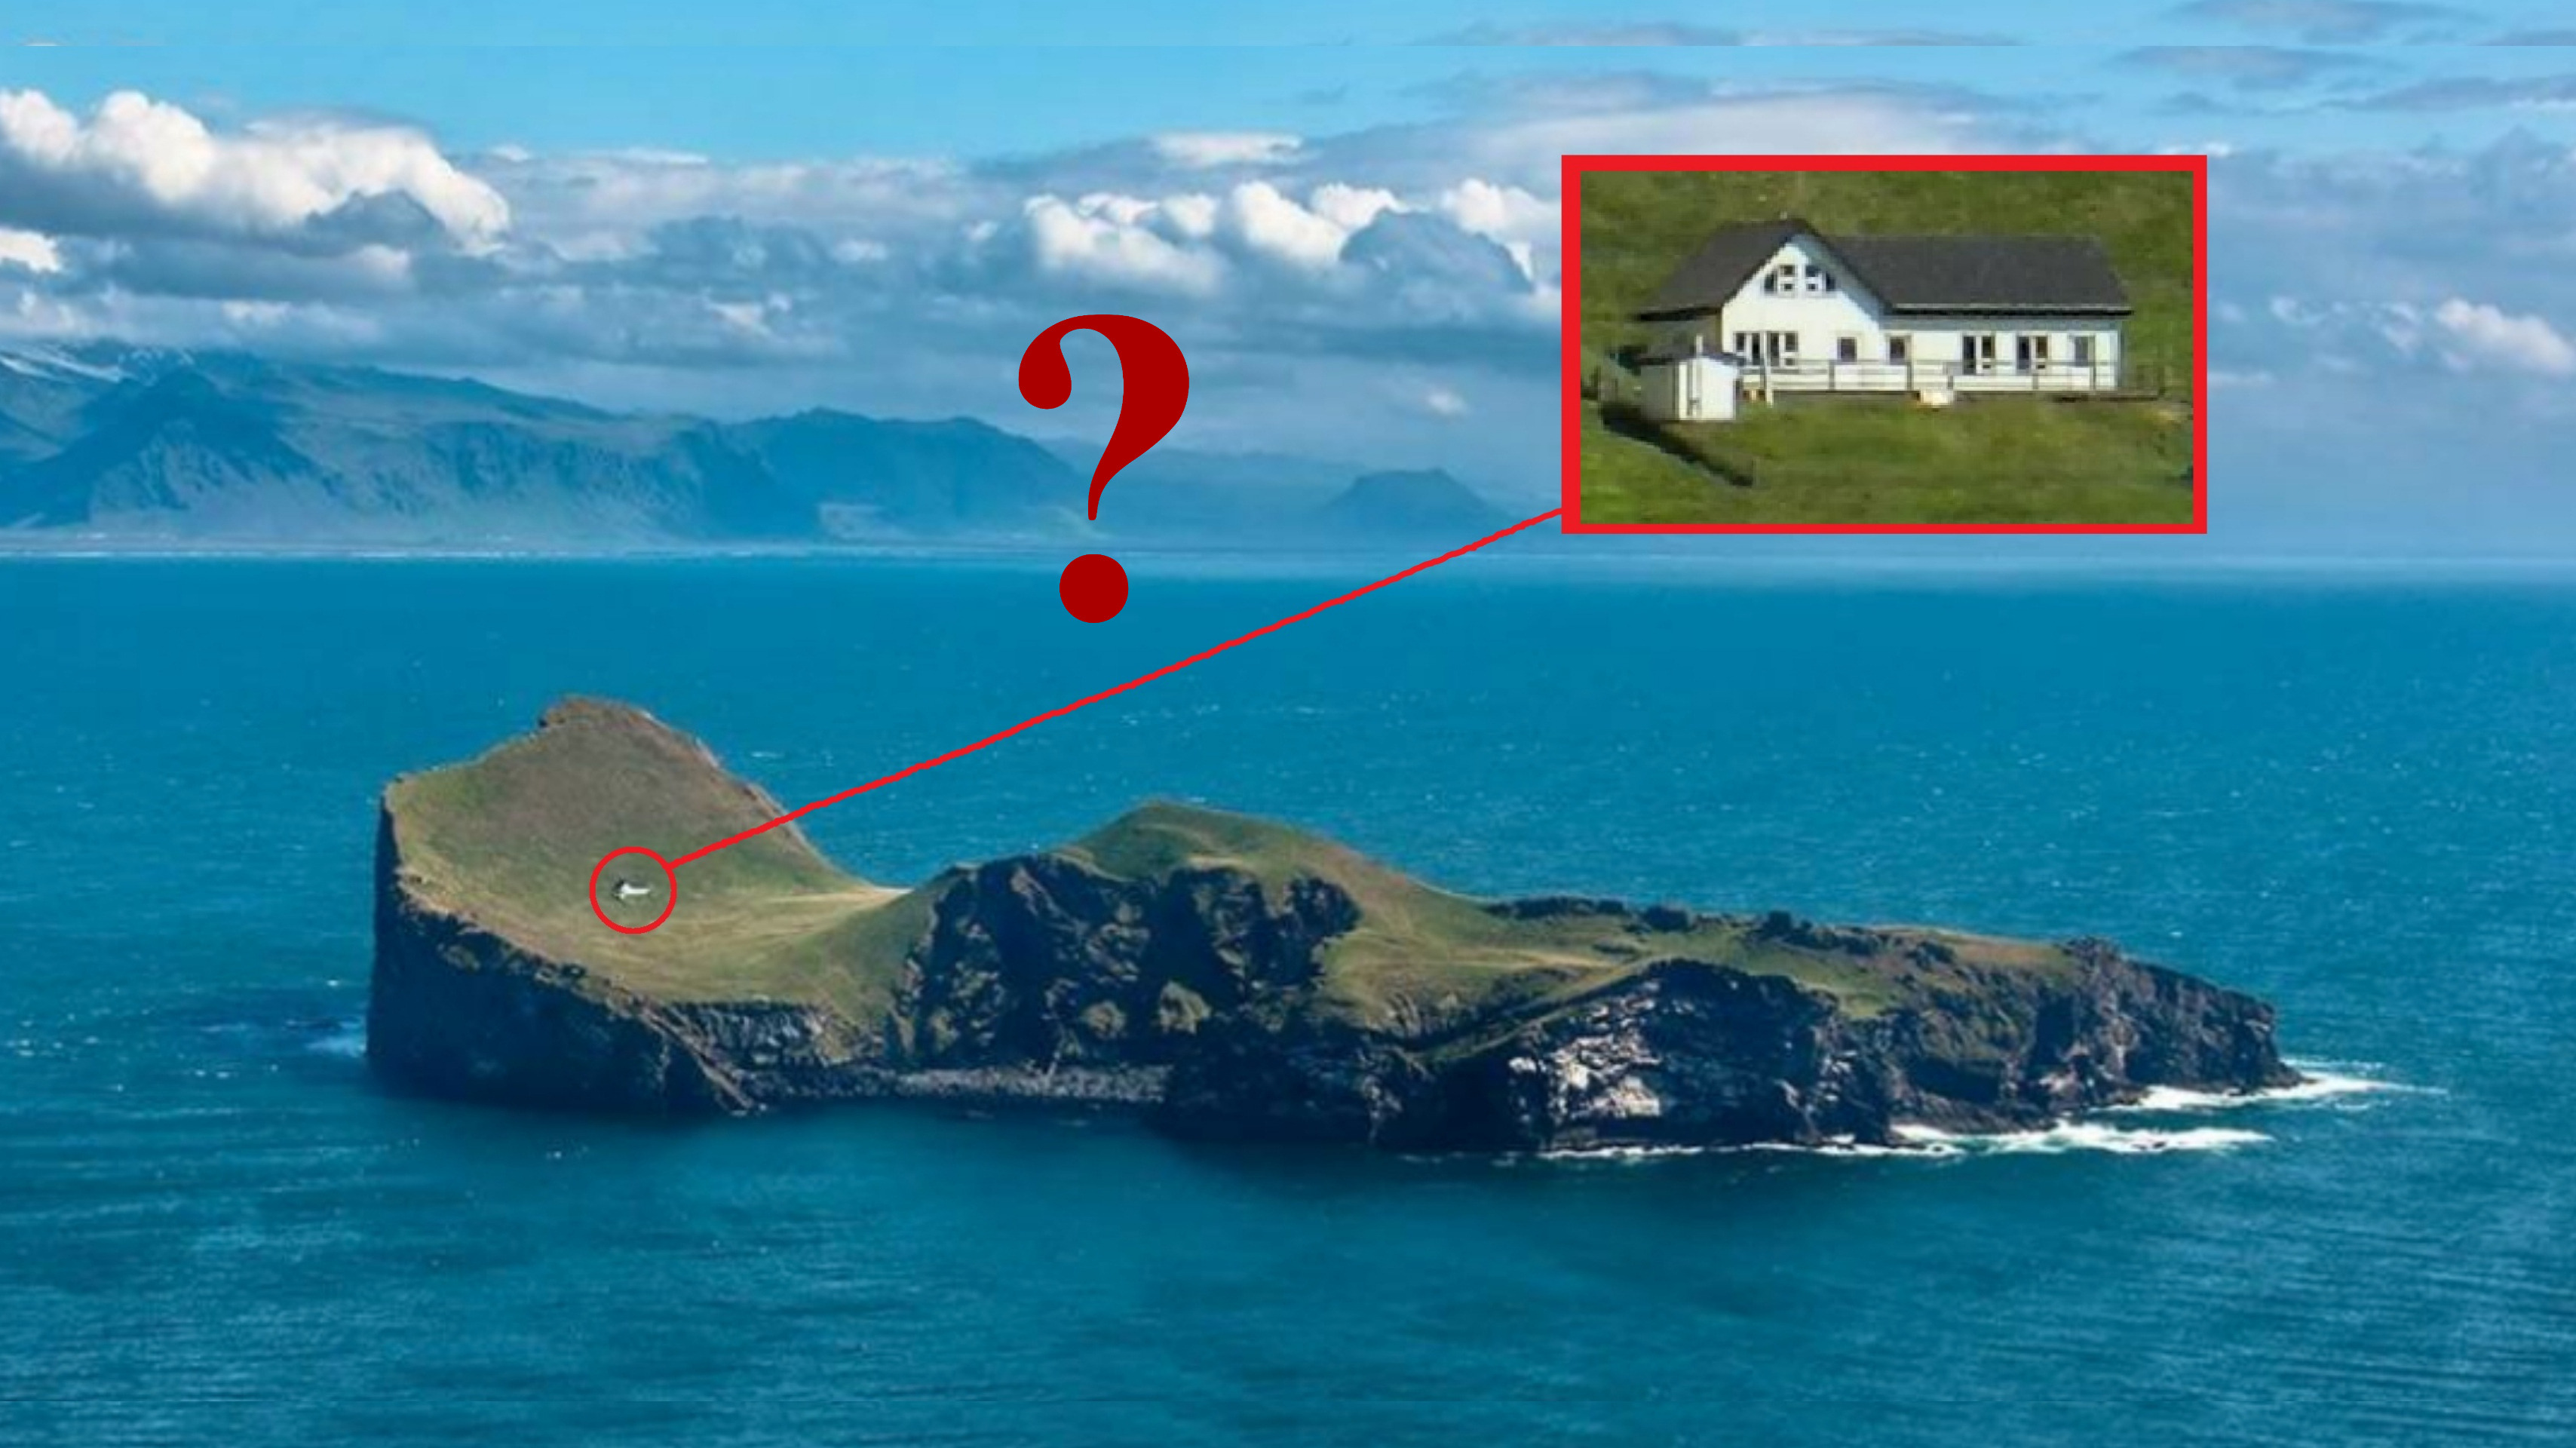 Разгадывали видео. Дом на острове. Домик на острове. Остров Исландия. Необитаемые острова.